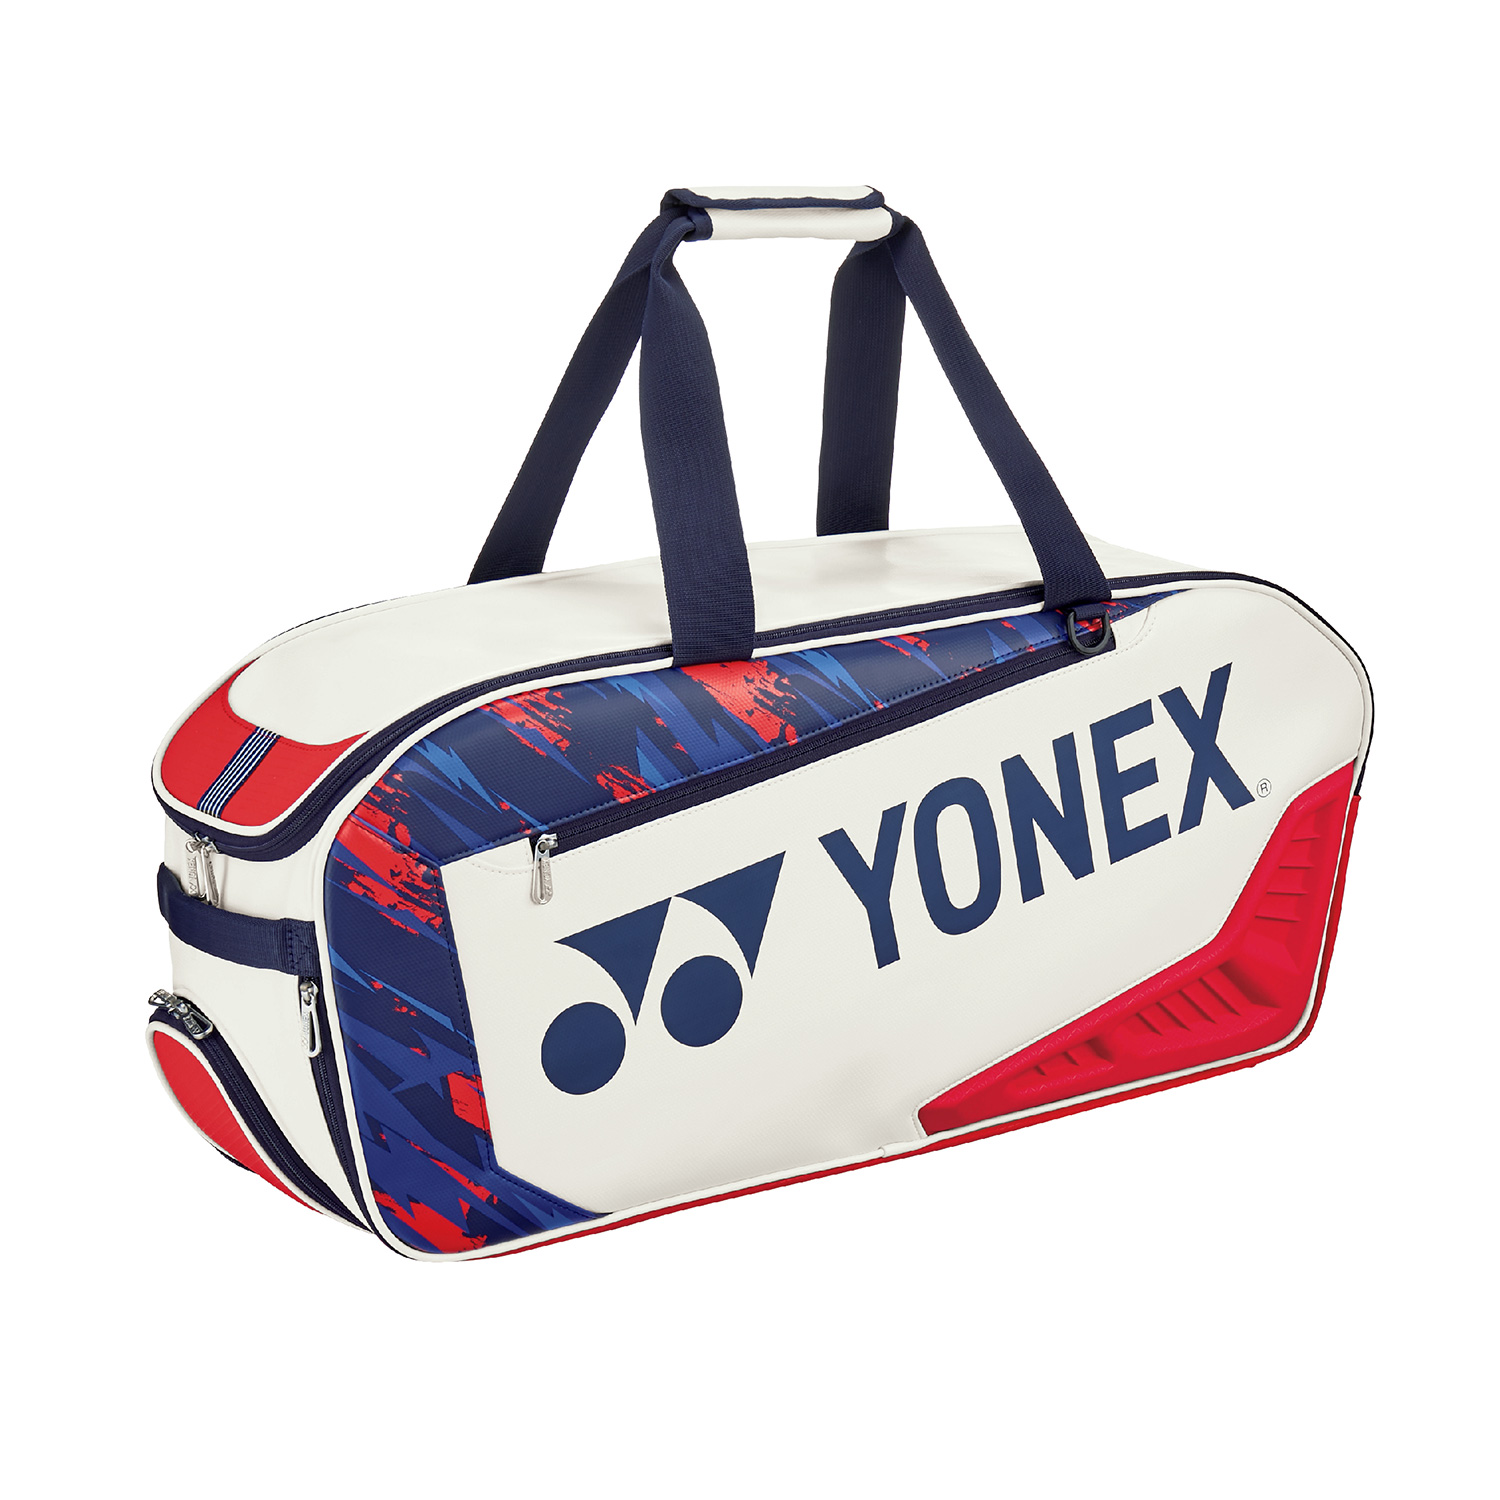 Yonex Expert Tournament Duffle - White/Red